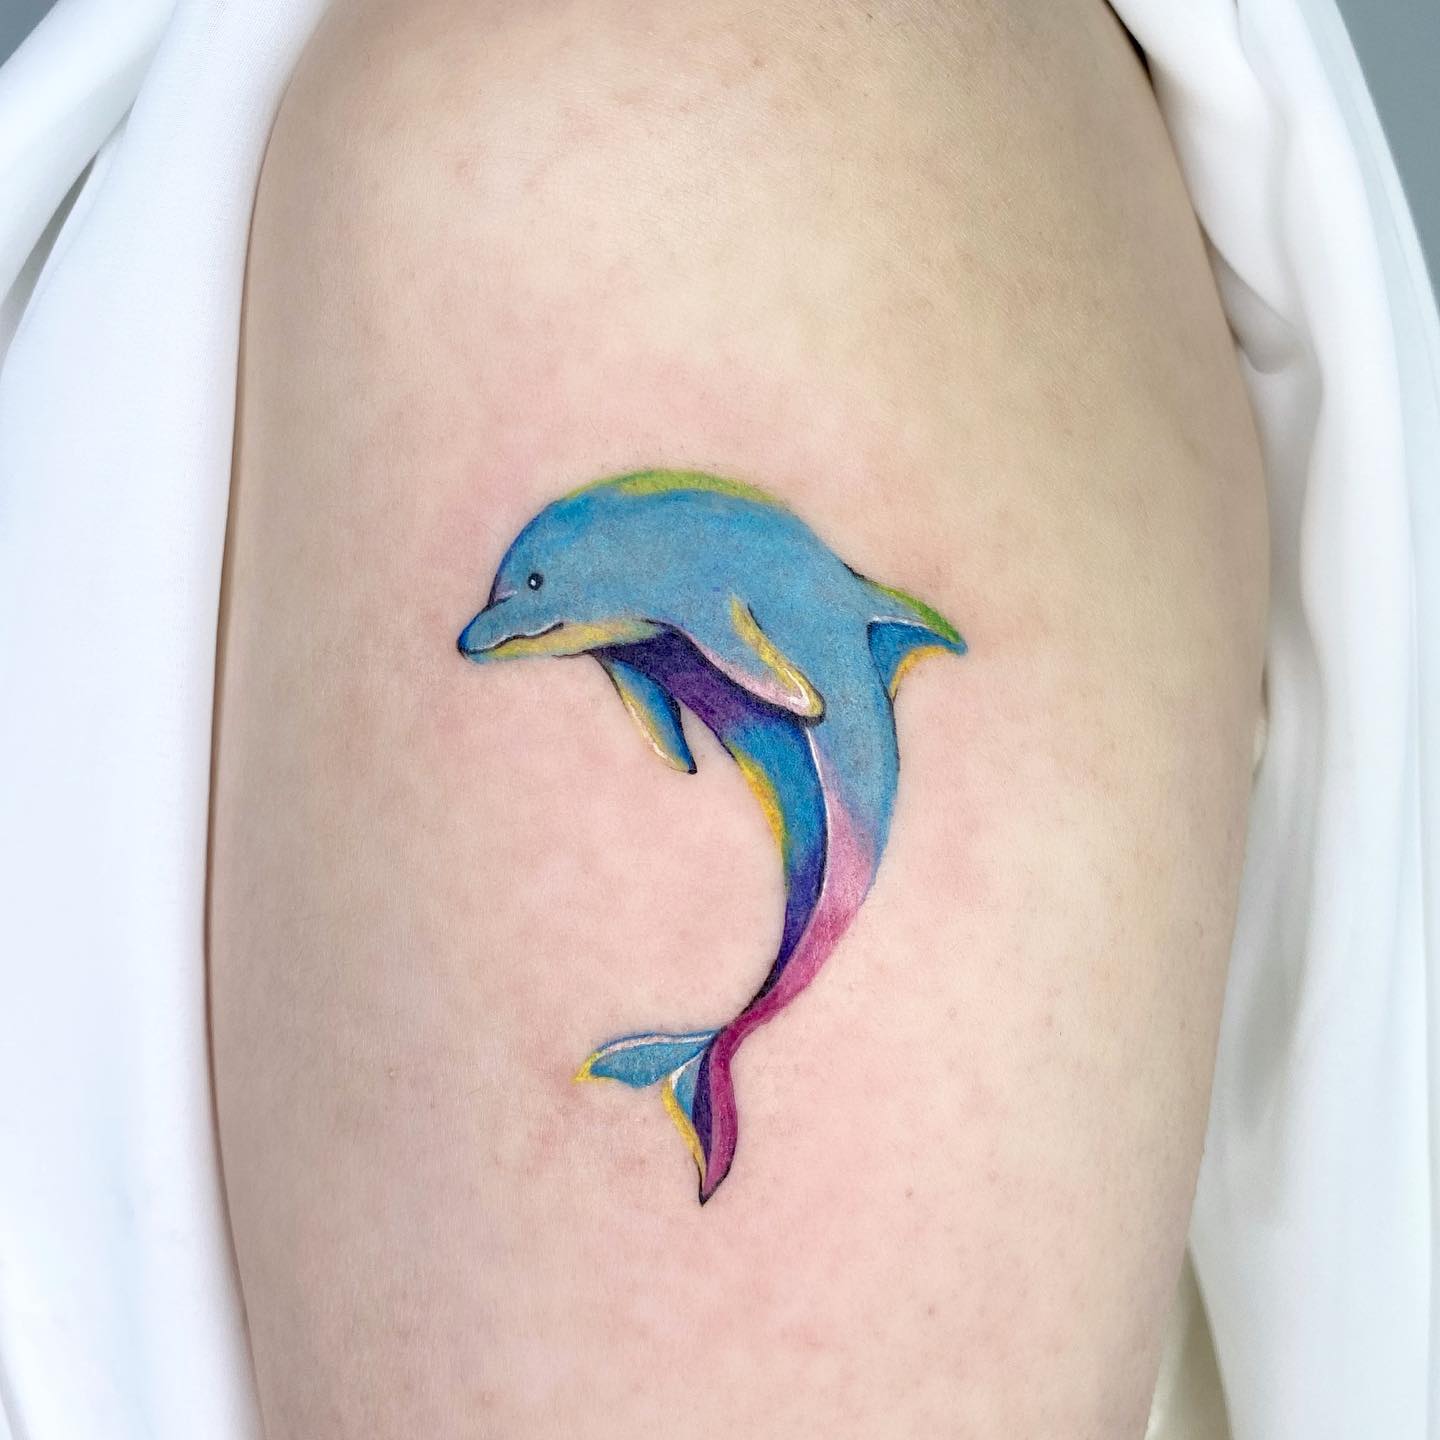 Tatuaje de delfines vibrante y fresco.